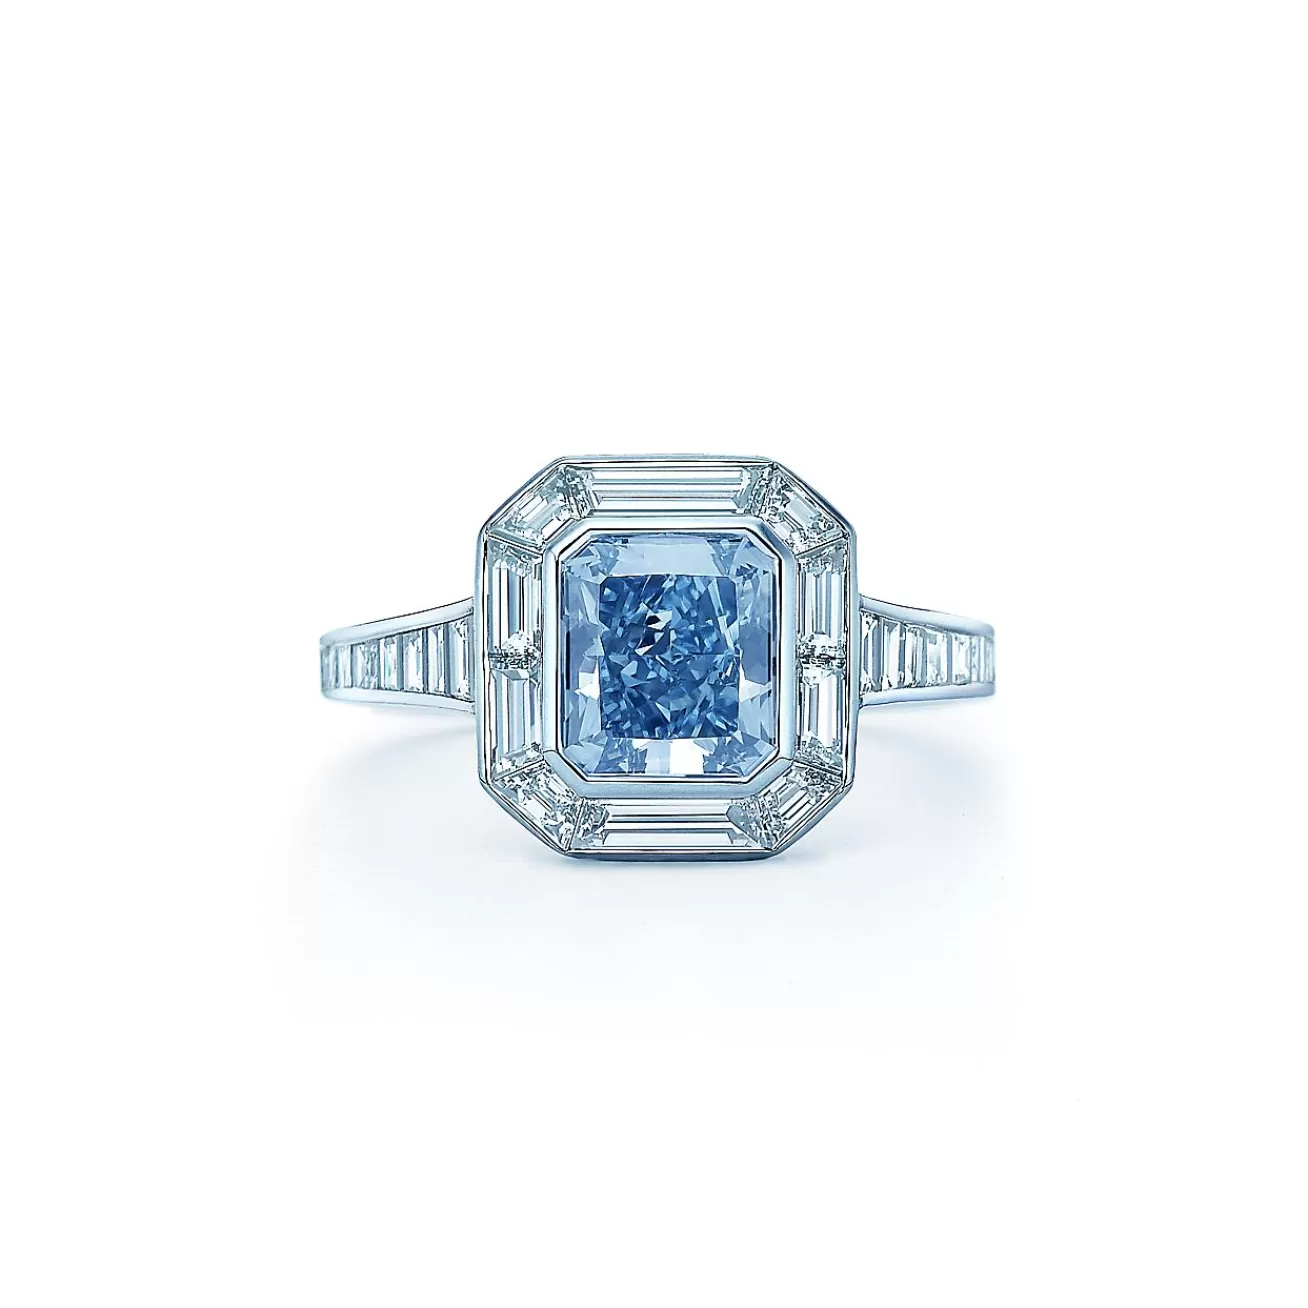 Tiffany & Co. Fancy Intense Blue diamond ring in platinum with white diamonds. | ^ Platinum Jewelry | Diamond Jewelry